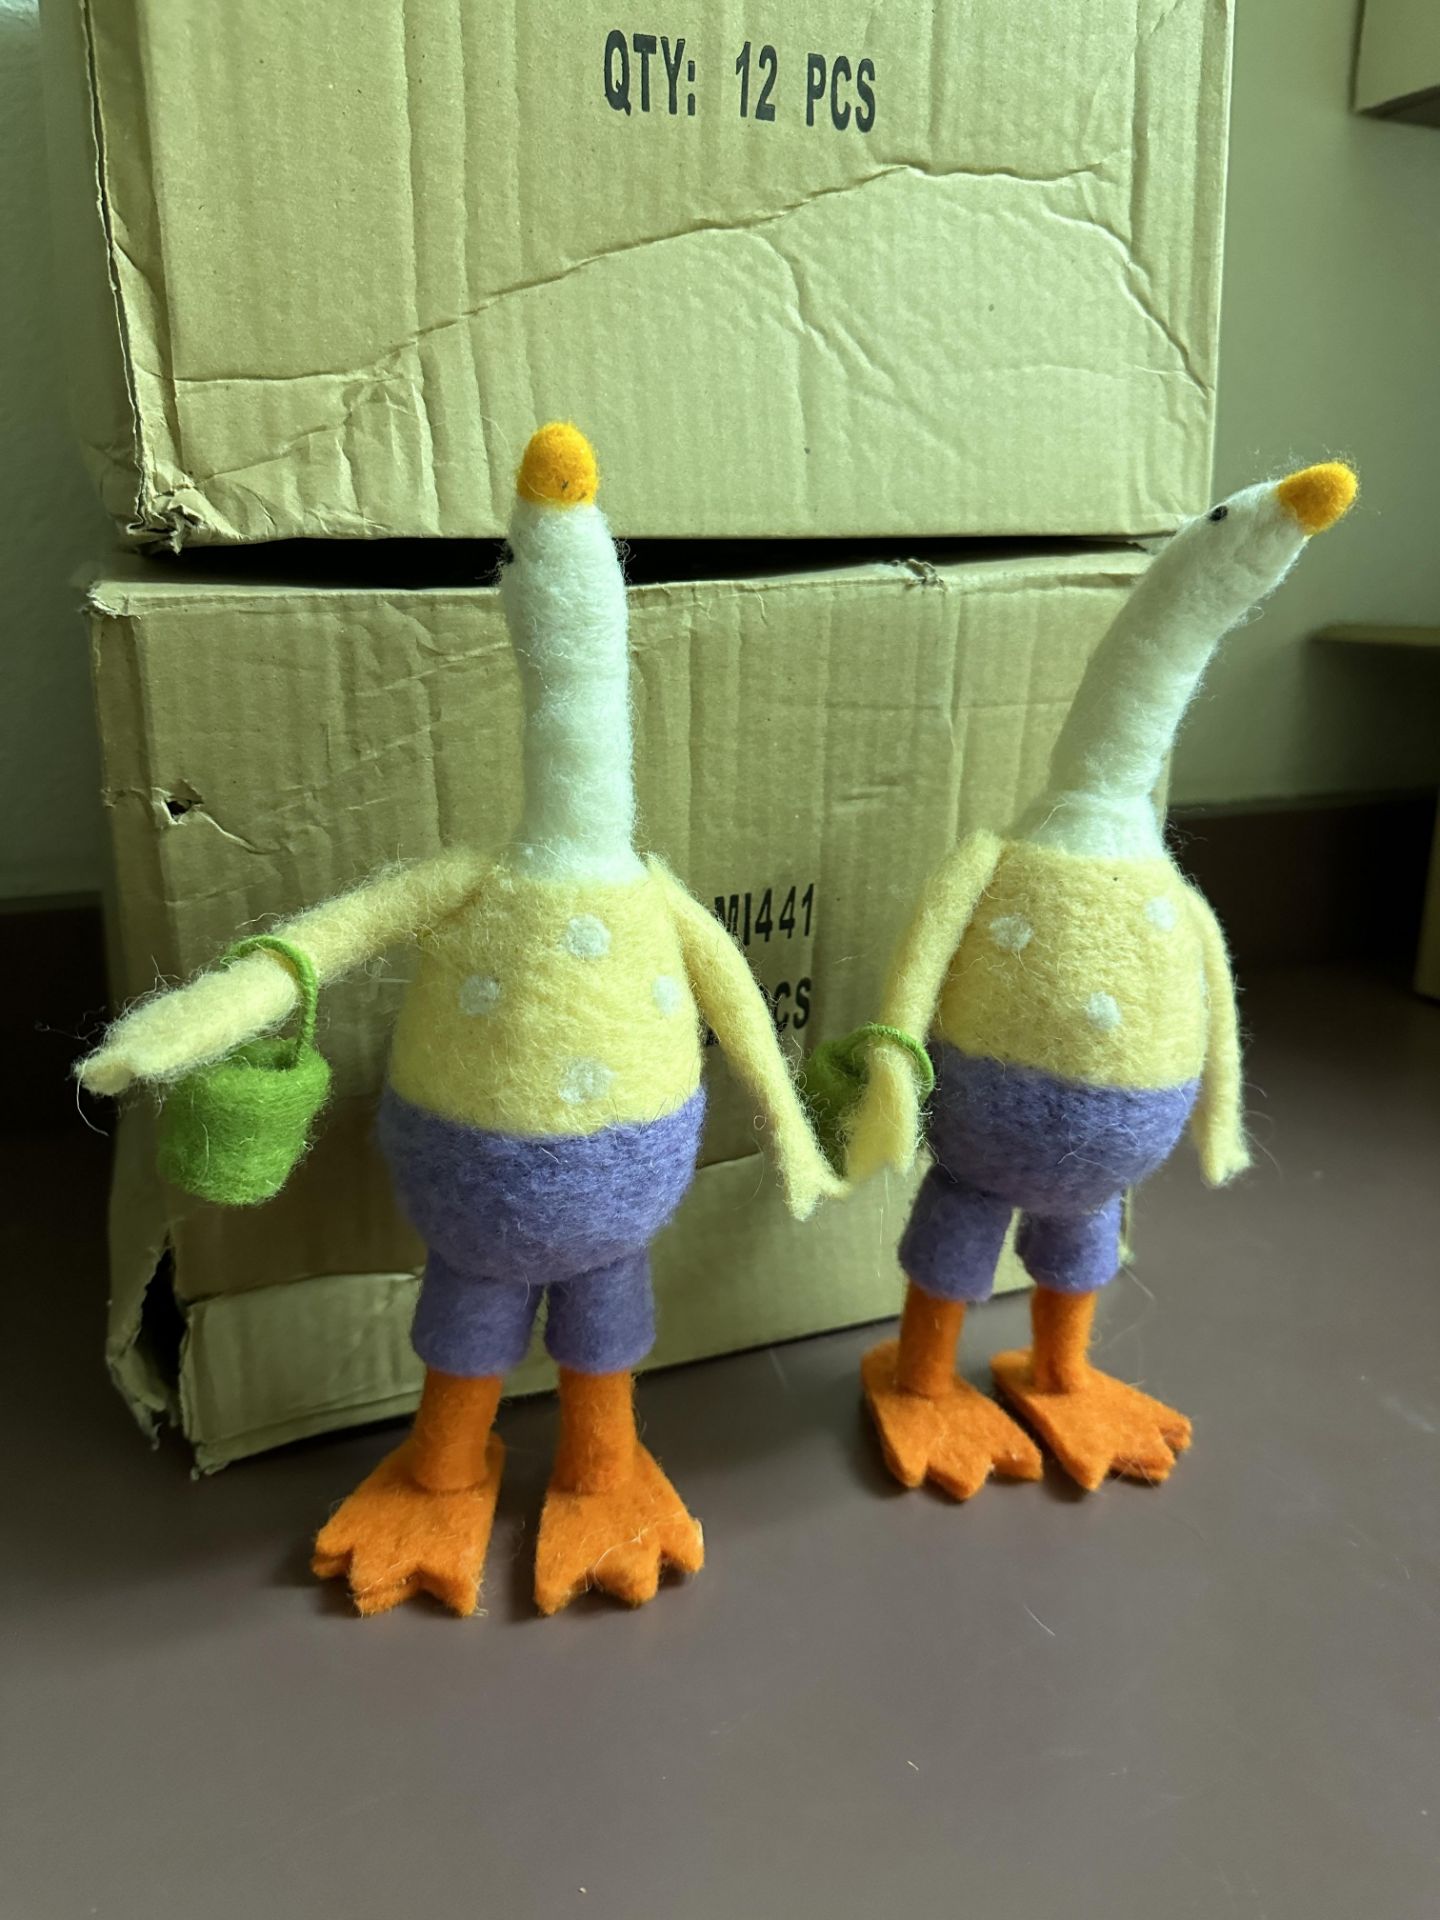 20x Goose Geese Plush Toys, Decorations, 8" MI441x2 - Image 4 of 4